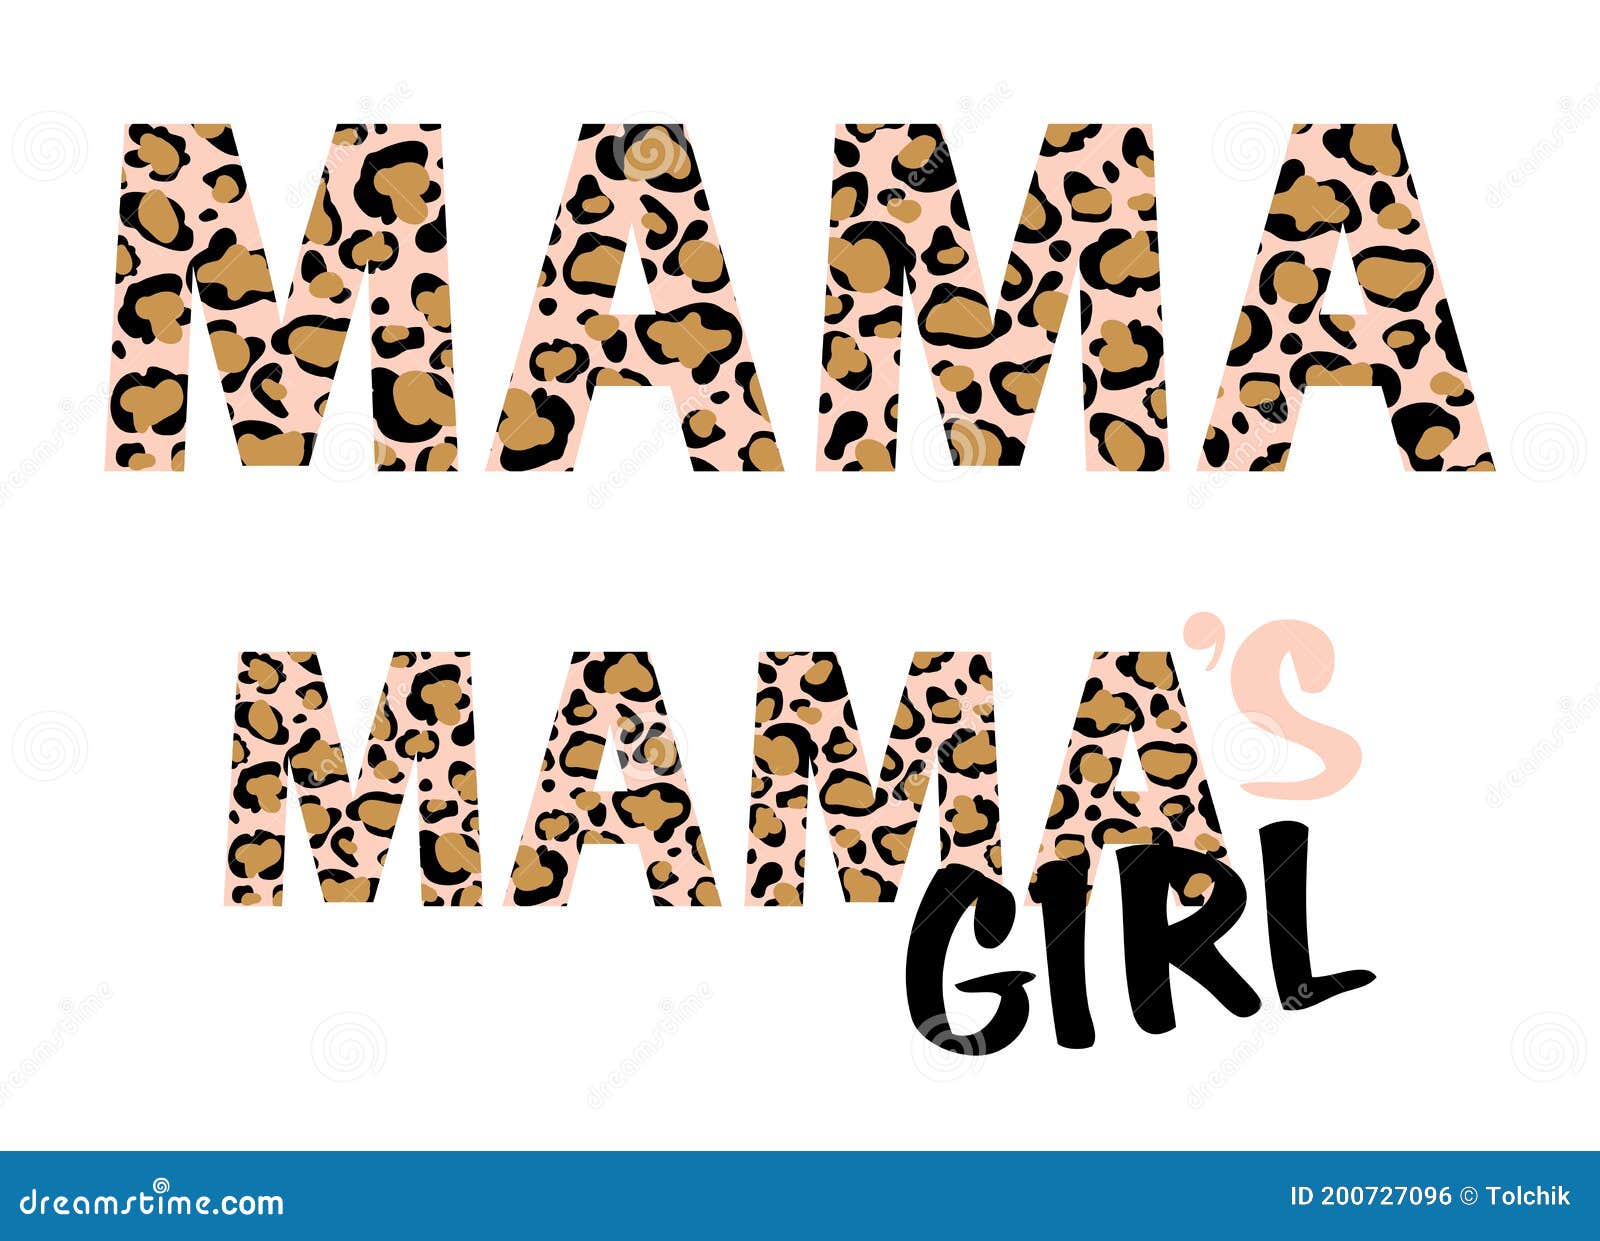 leopard mama girl print   for chirt decor